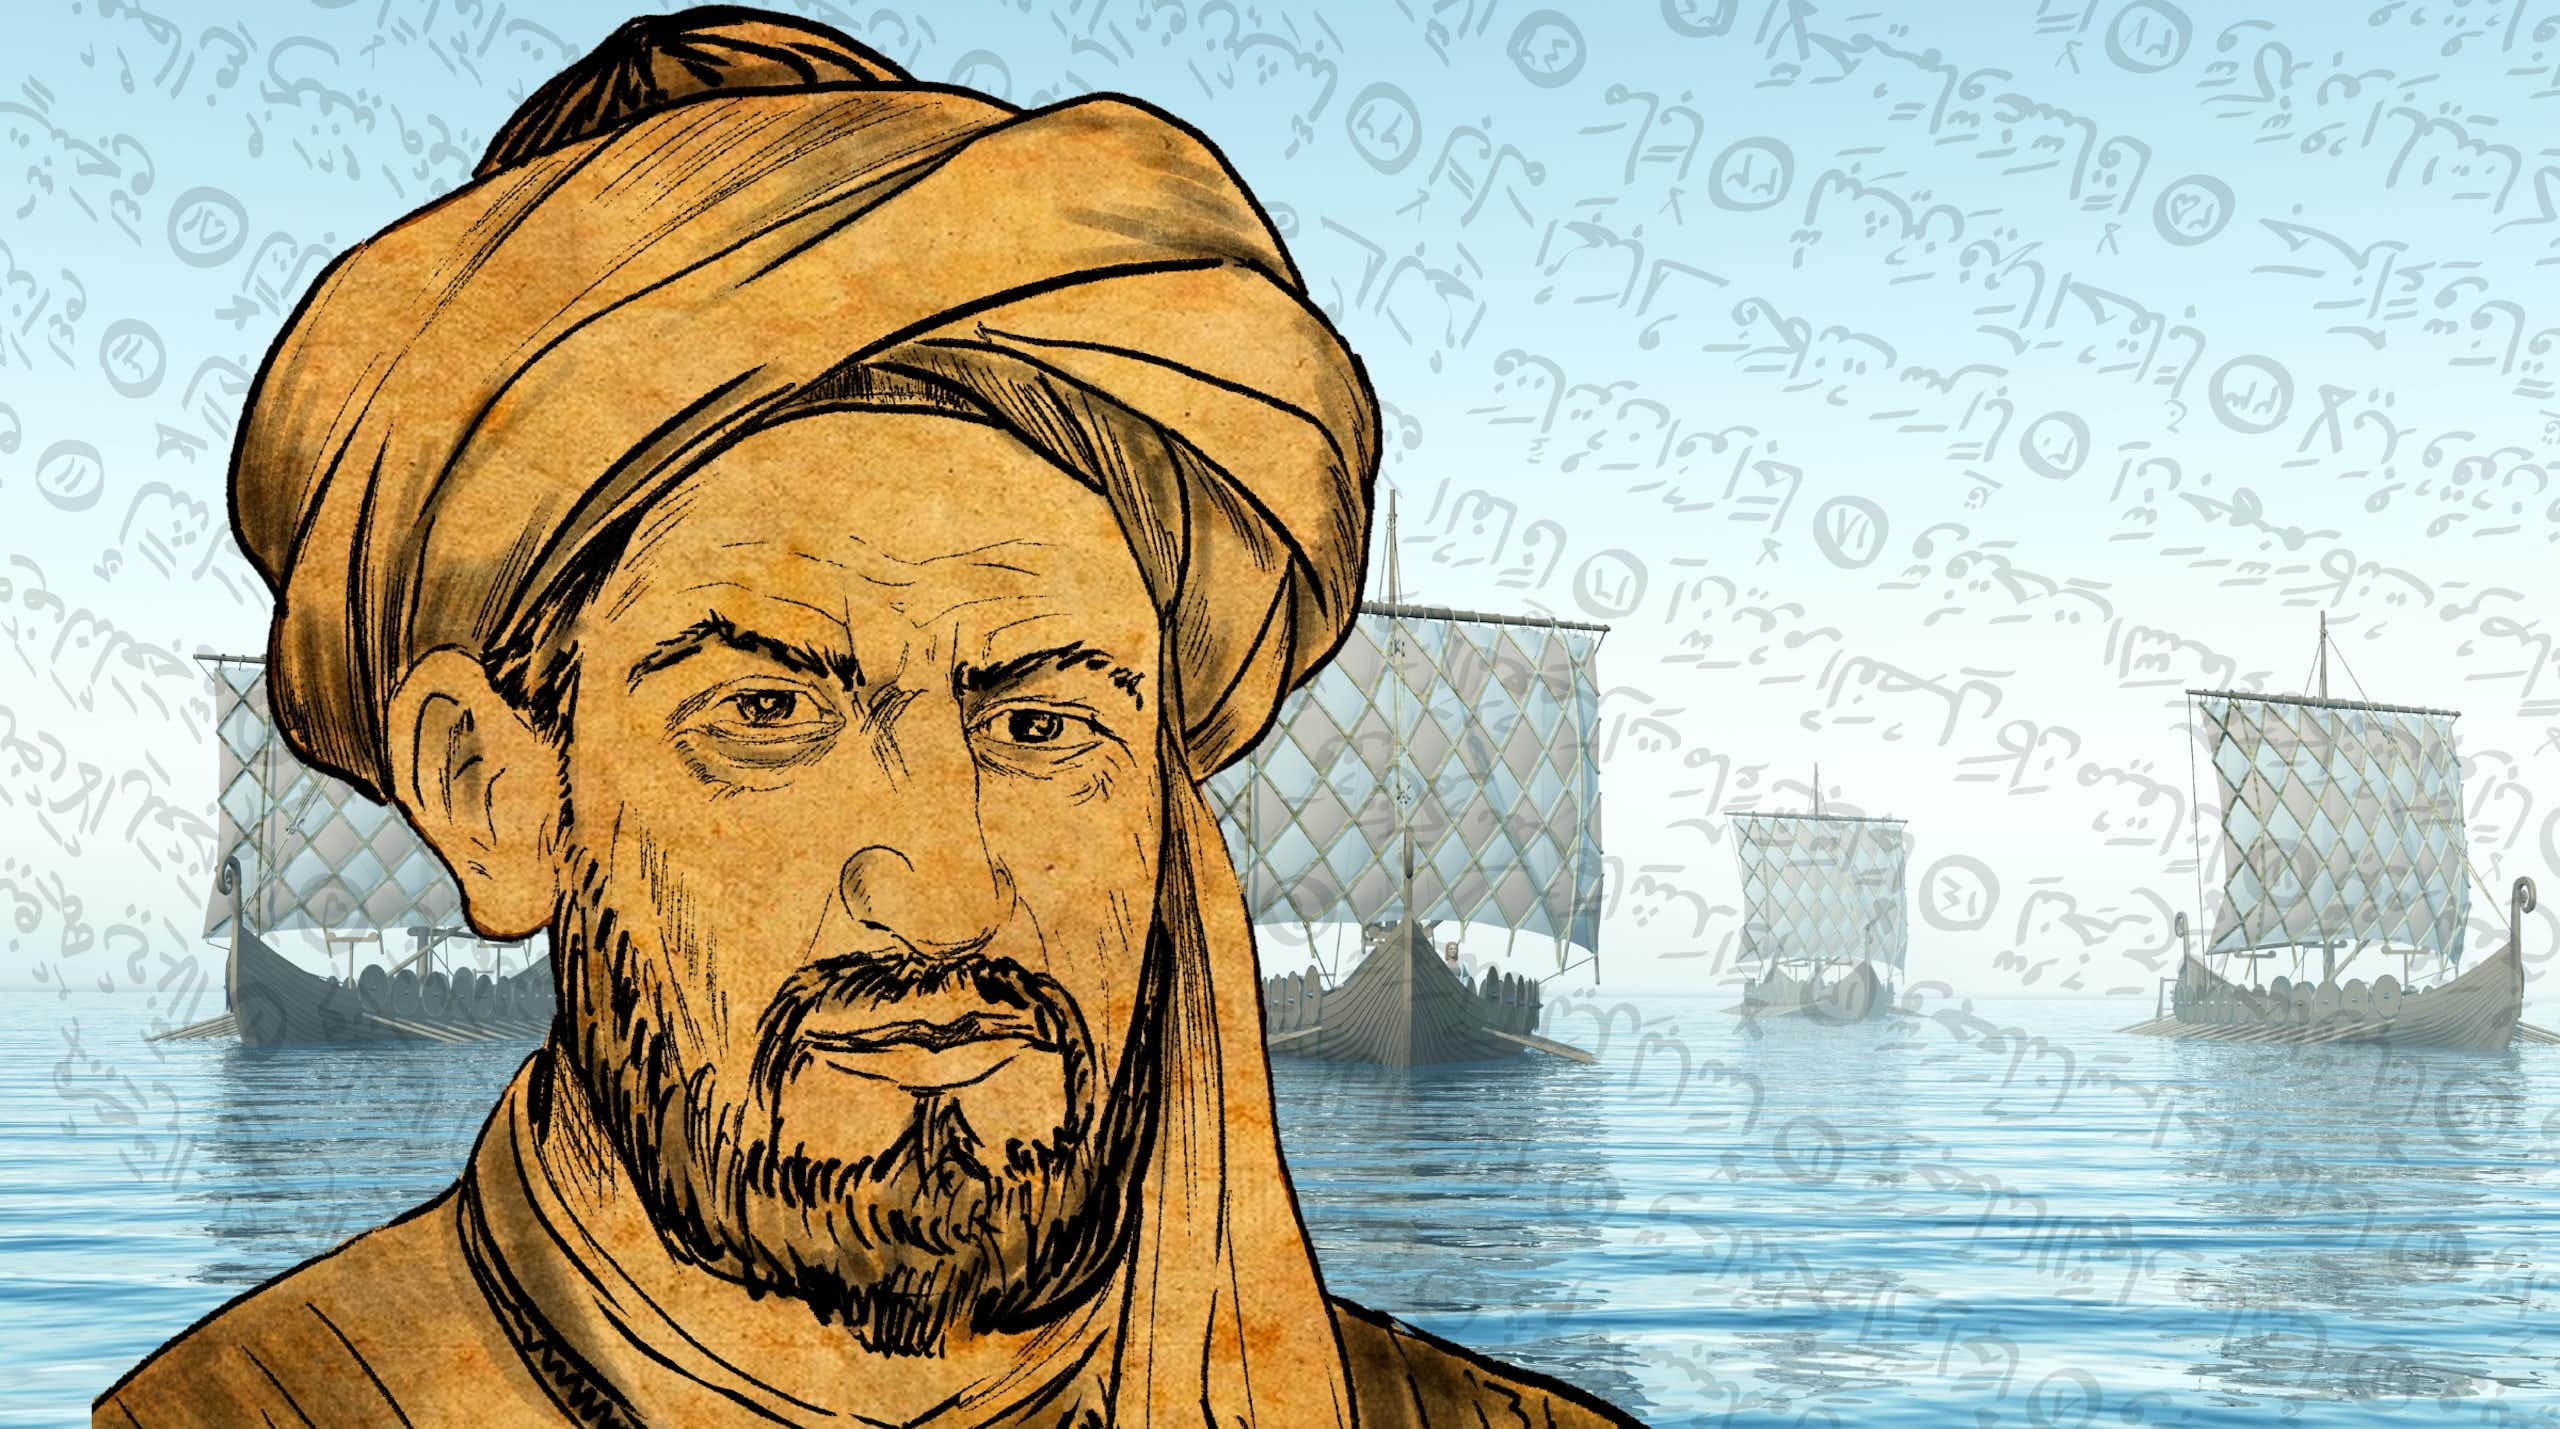 Ahmad ibn Fadlan in front of Viking ships. 